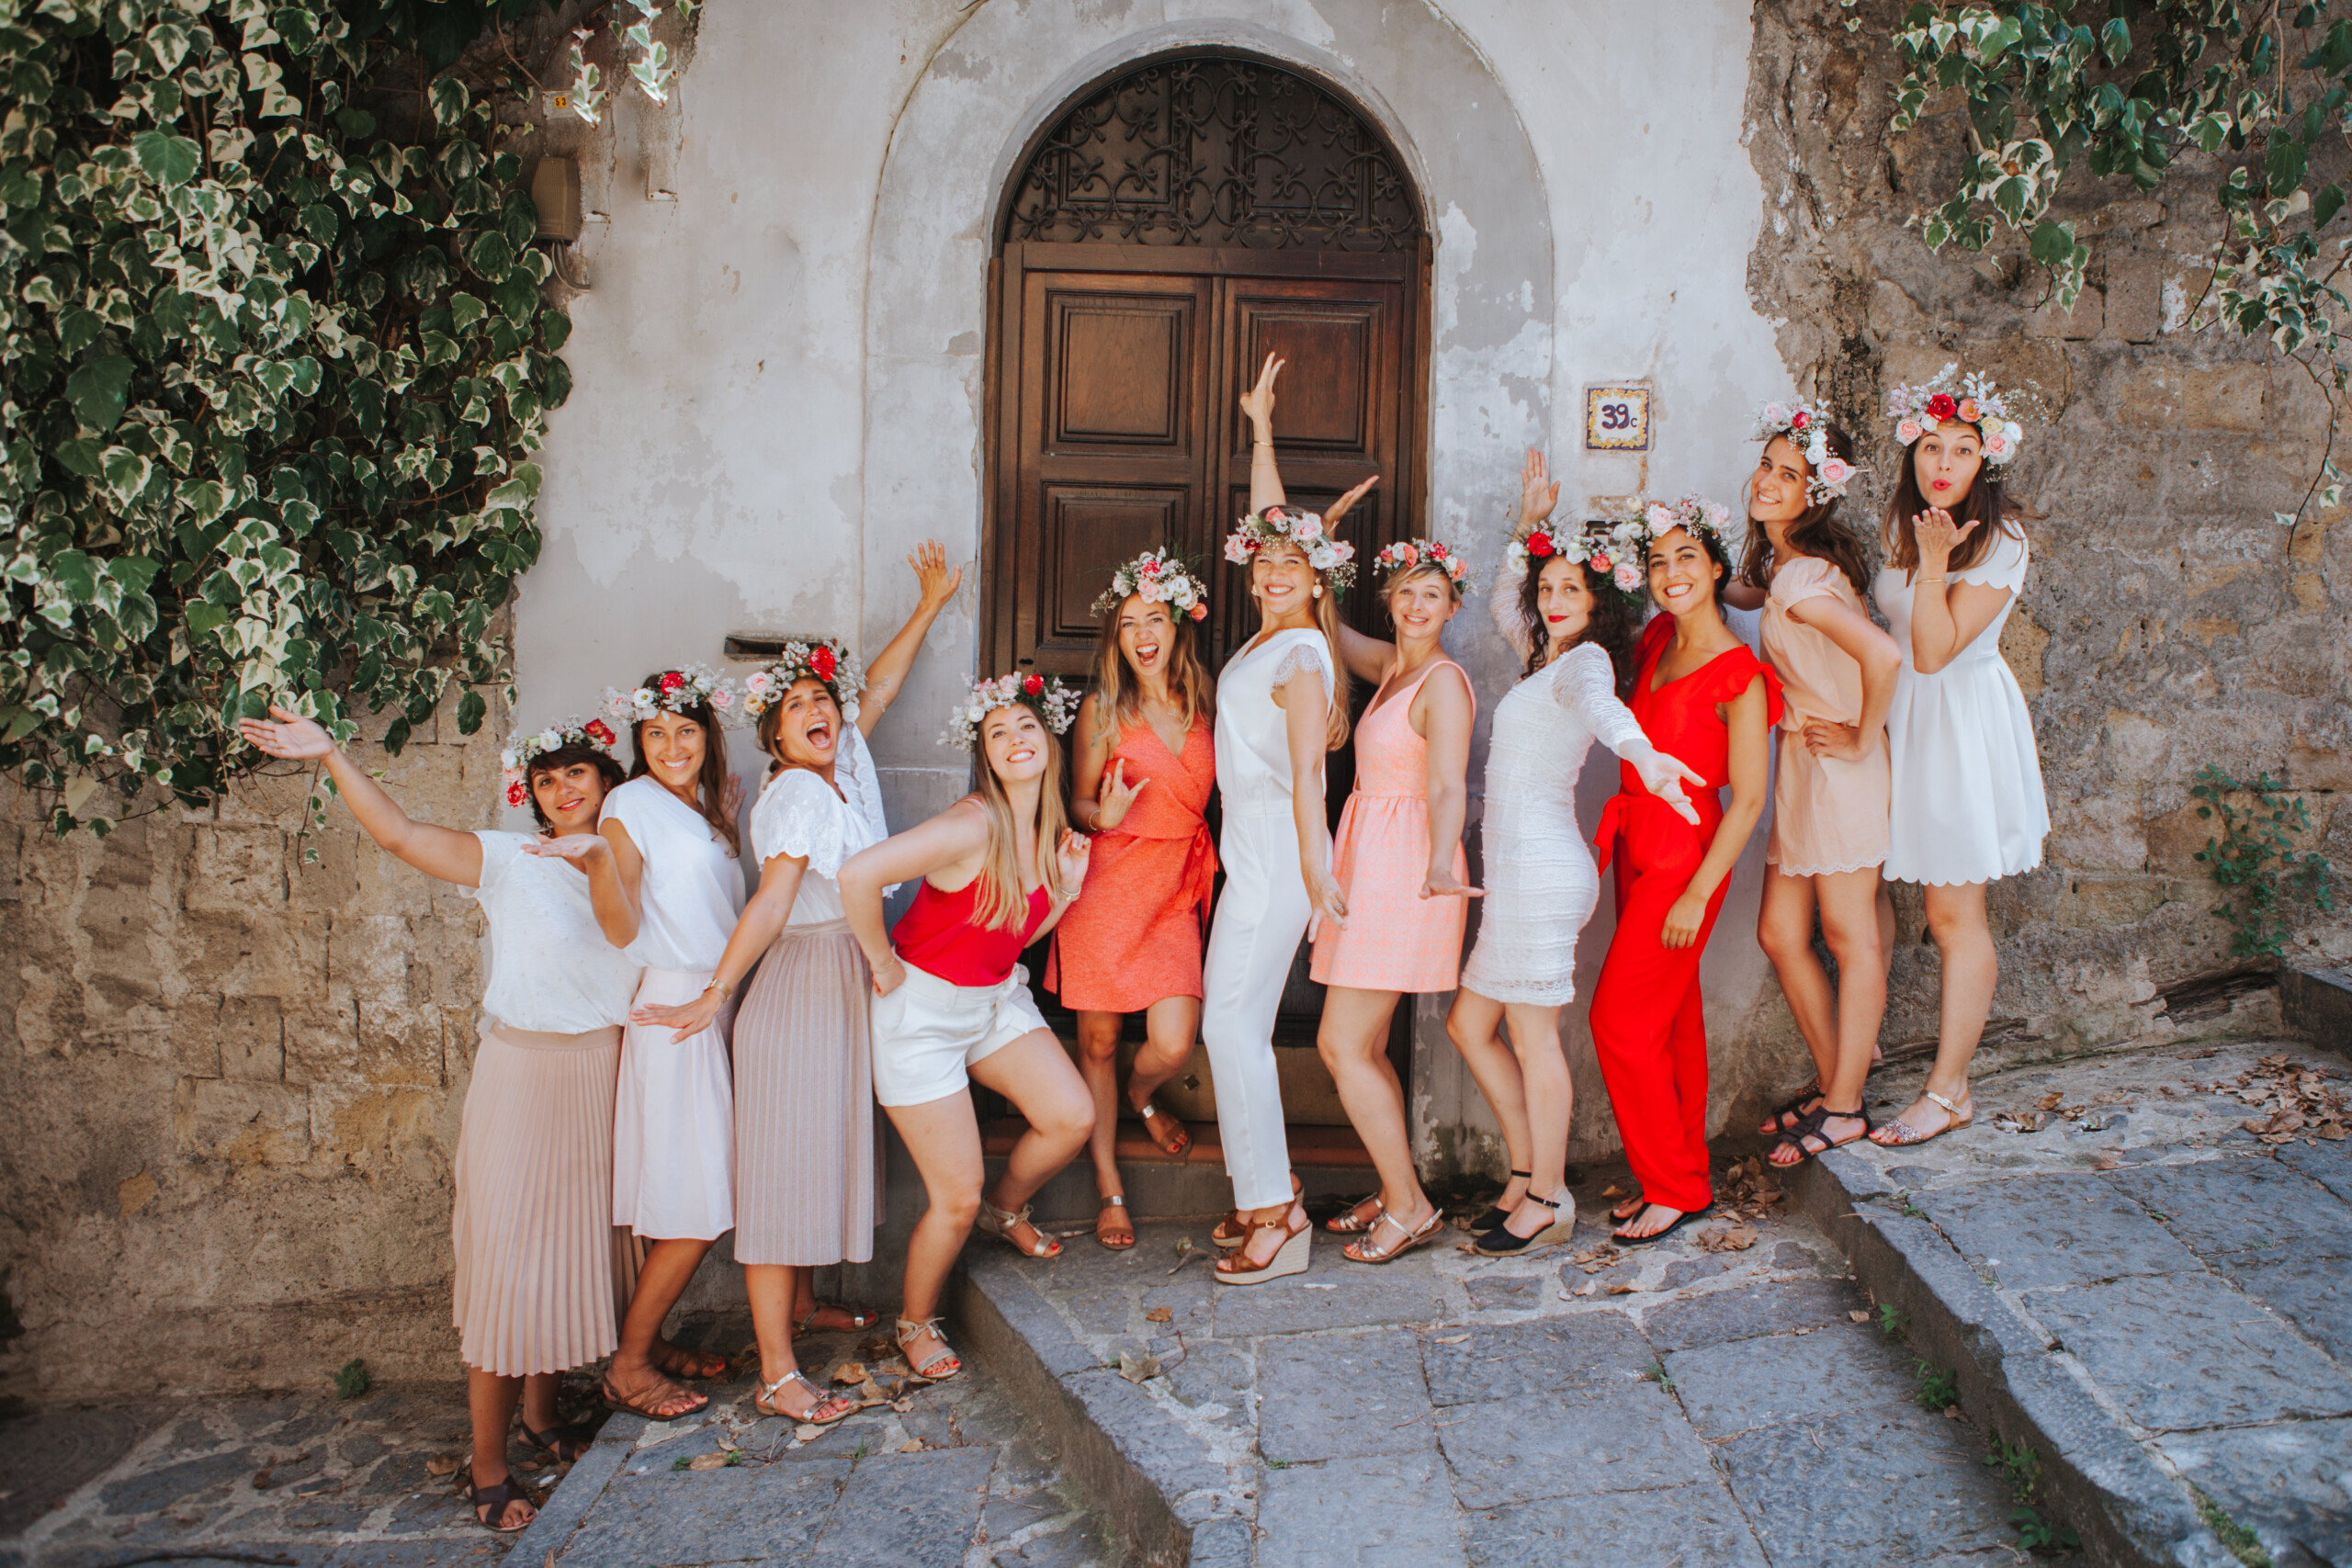 Bachelorette photoshoot by Serena, Localgrapher in Napoli